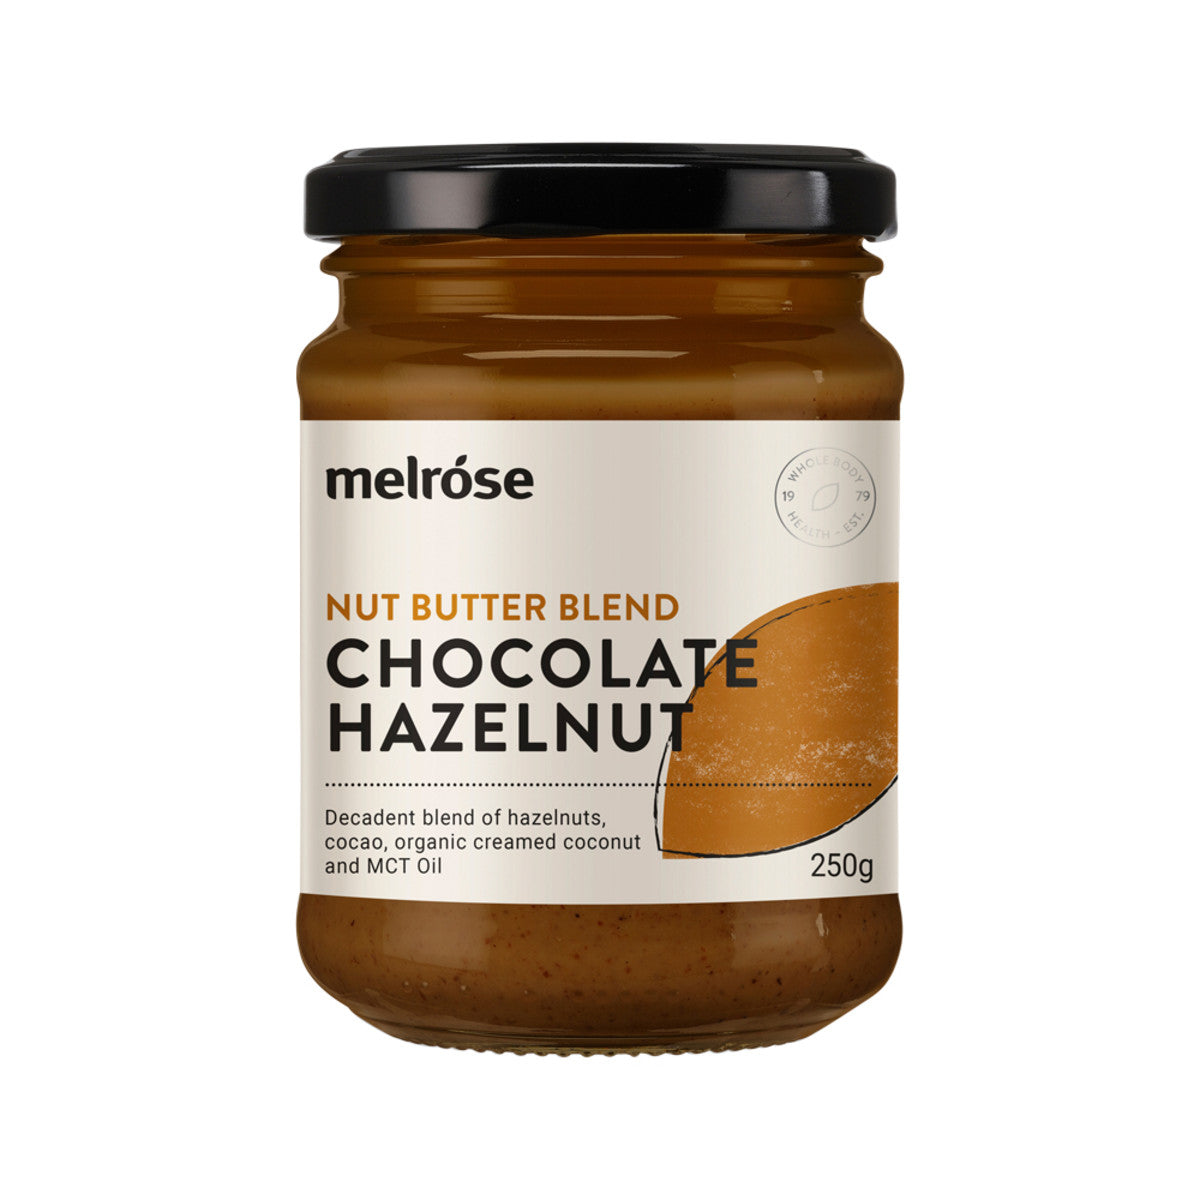 Melrose Nut Butter Blend Chocolate Hazelnut 250g-The Living Co.